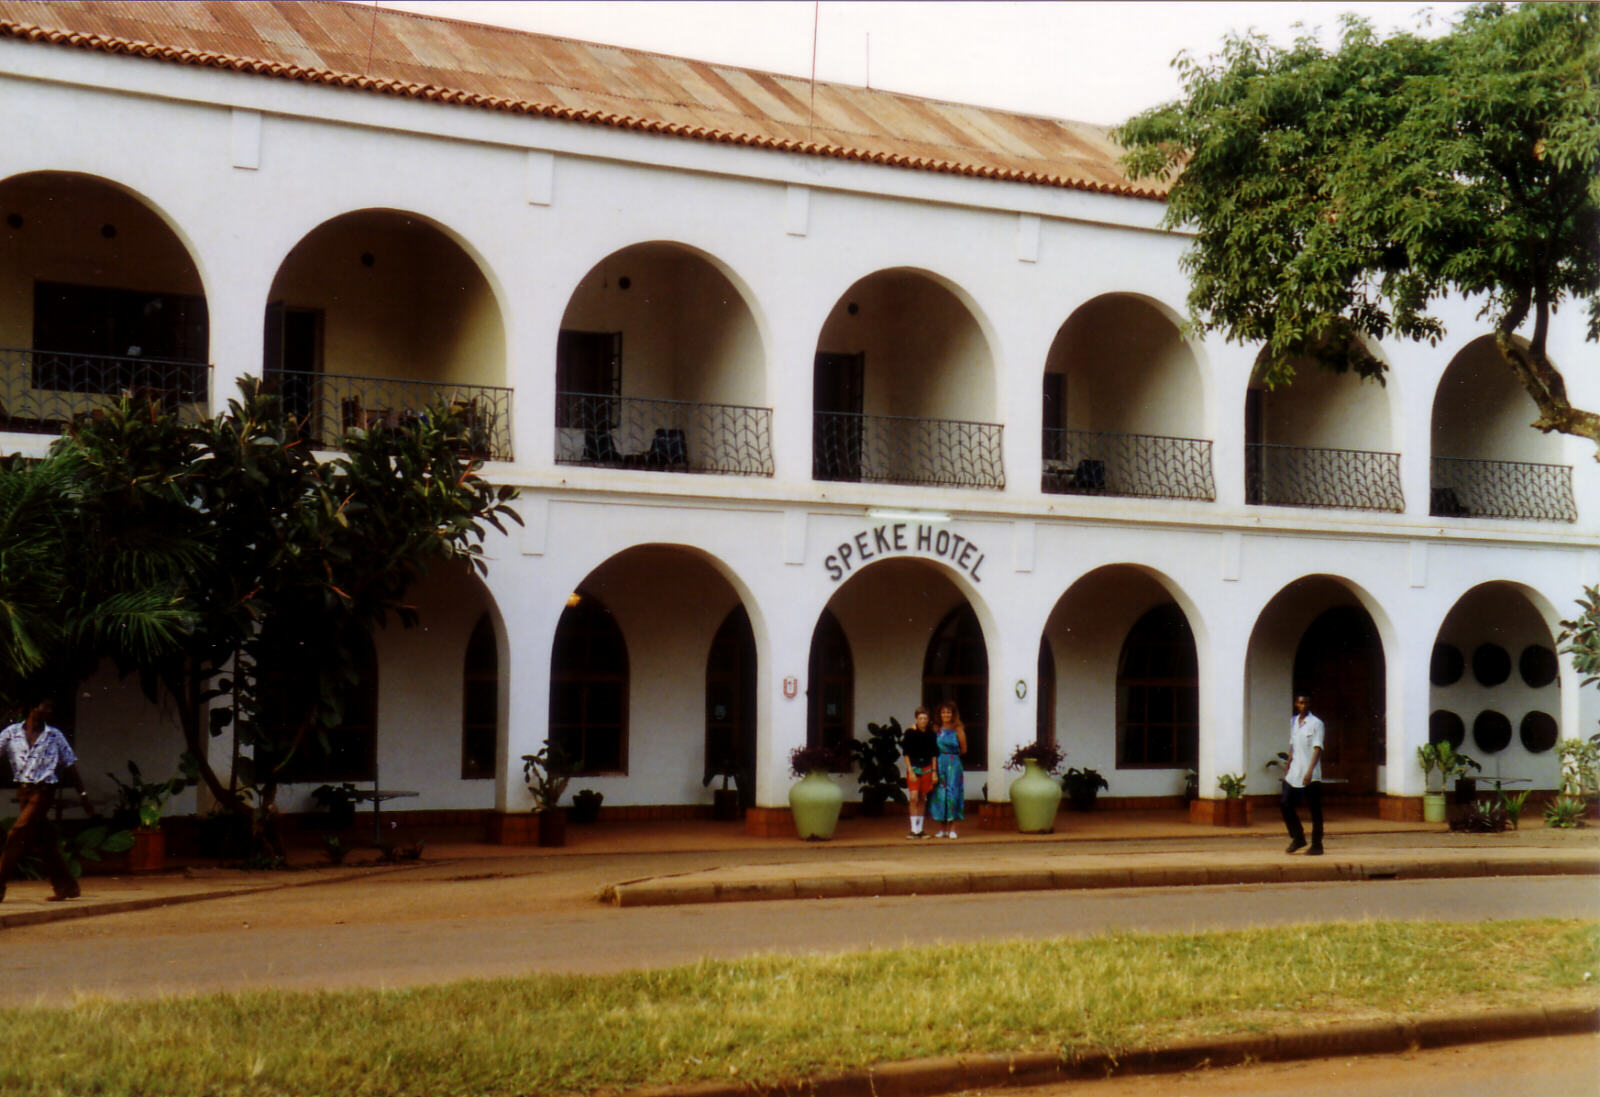 The old colonial Speke hotel in Kampala, Uganda